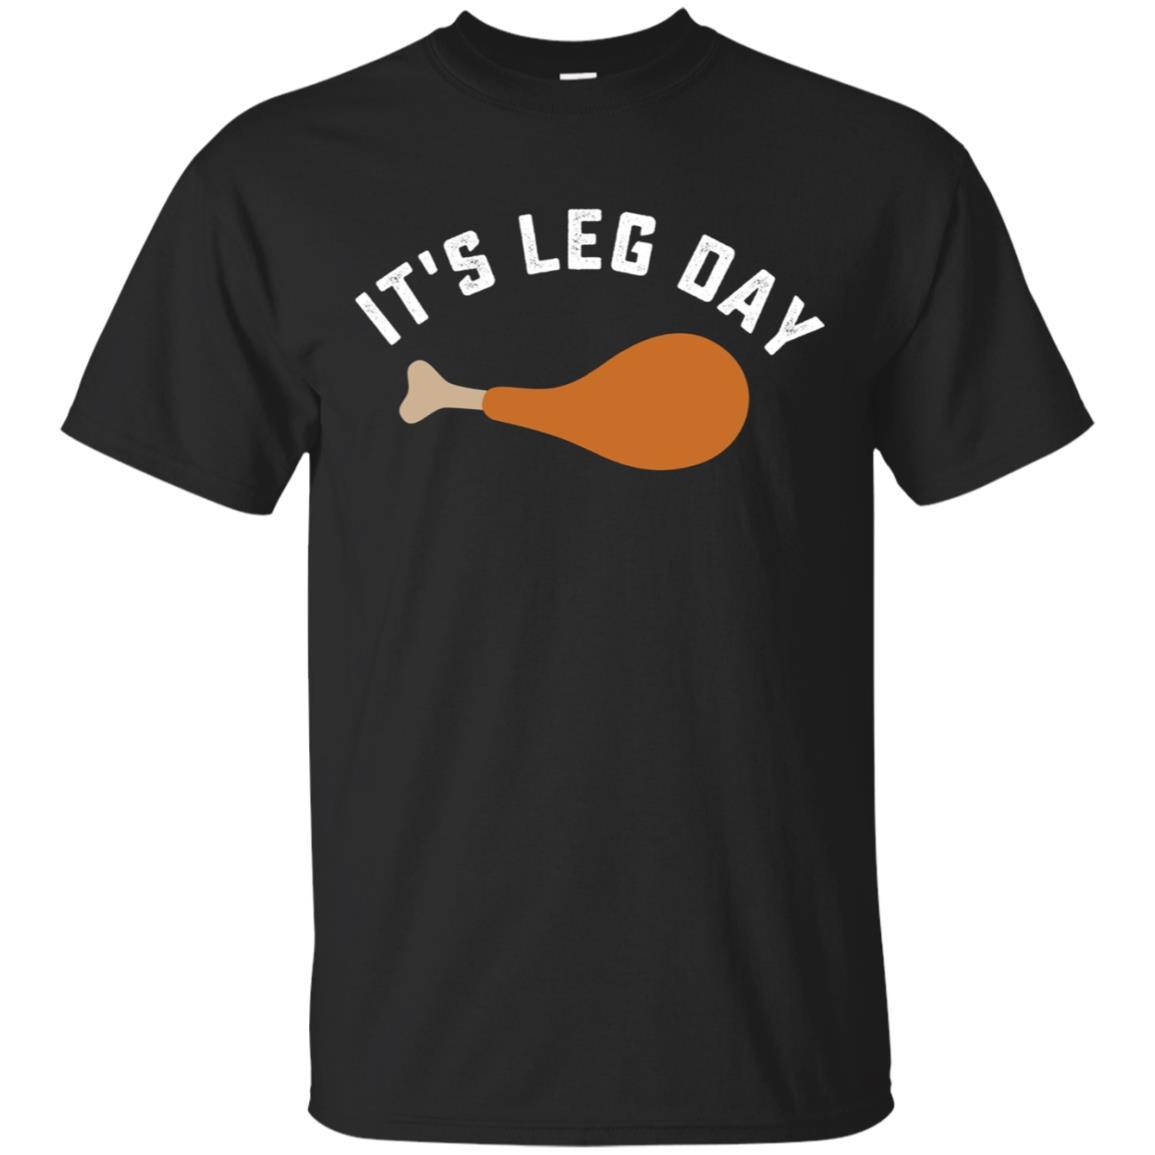 Buy Funny Thanksgiving Turkey Leg Day Tshirt